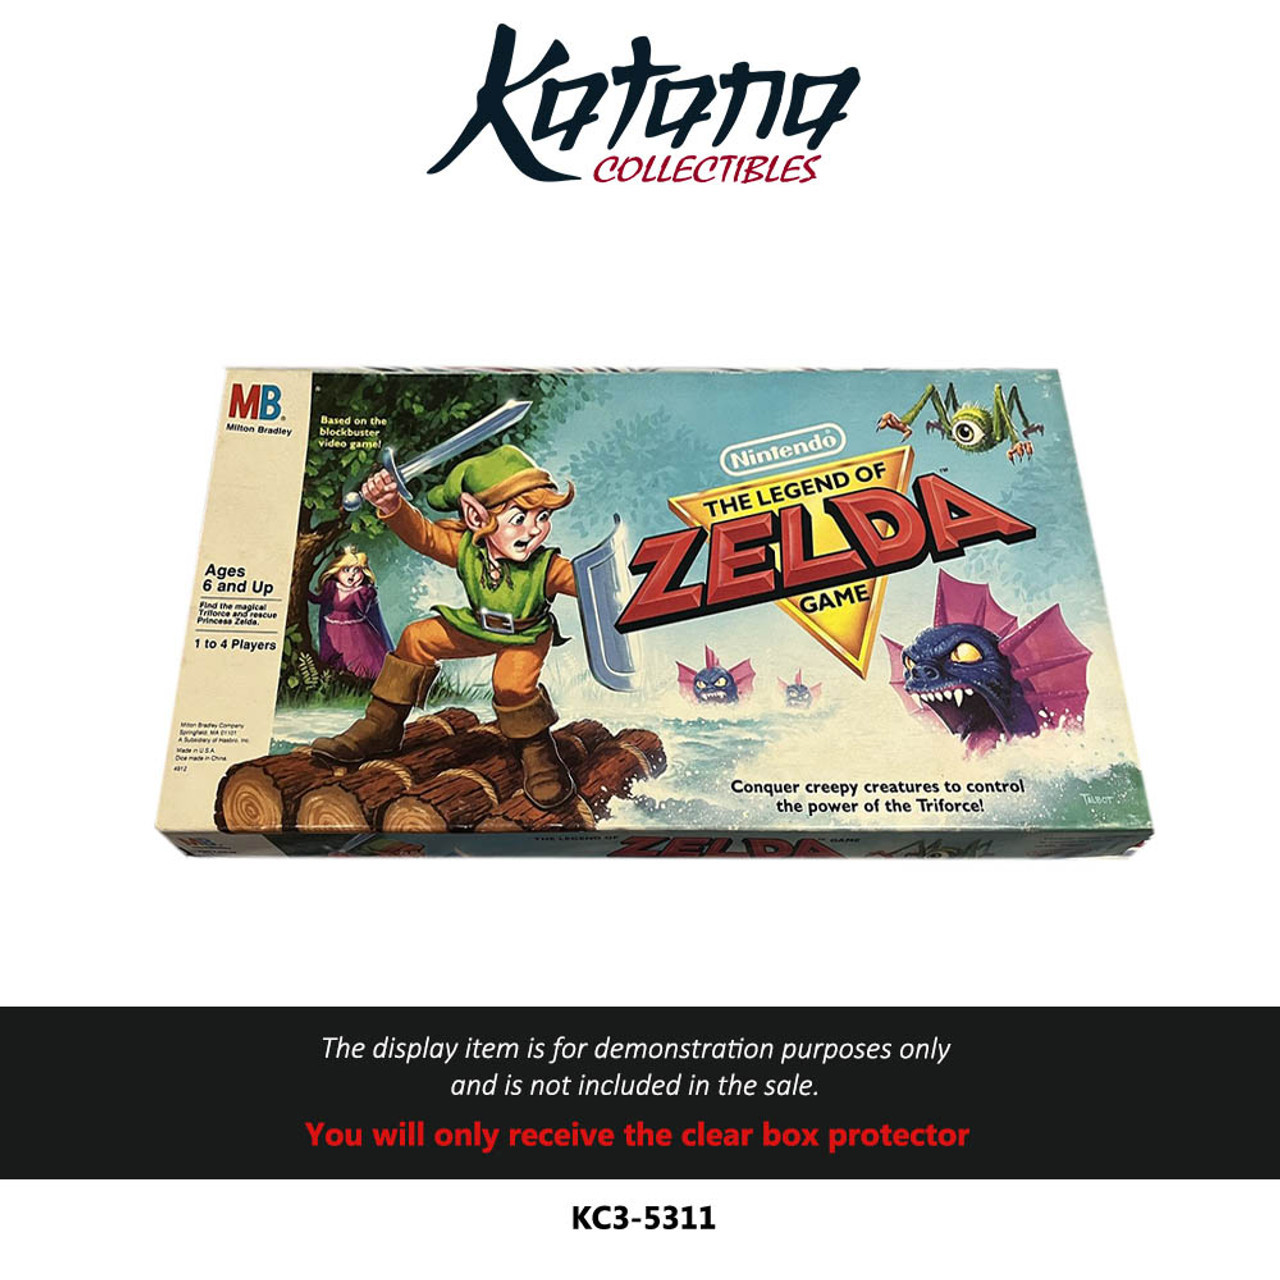 Katana Collectibles Protector For Zelda Board Game